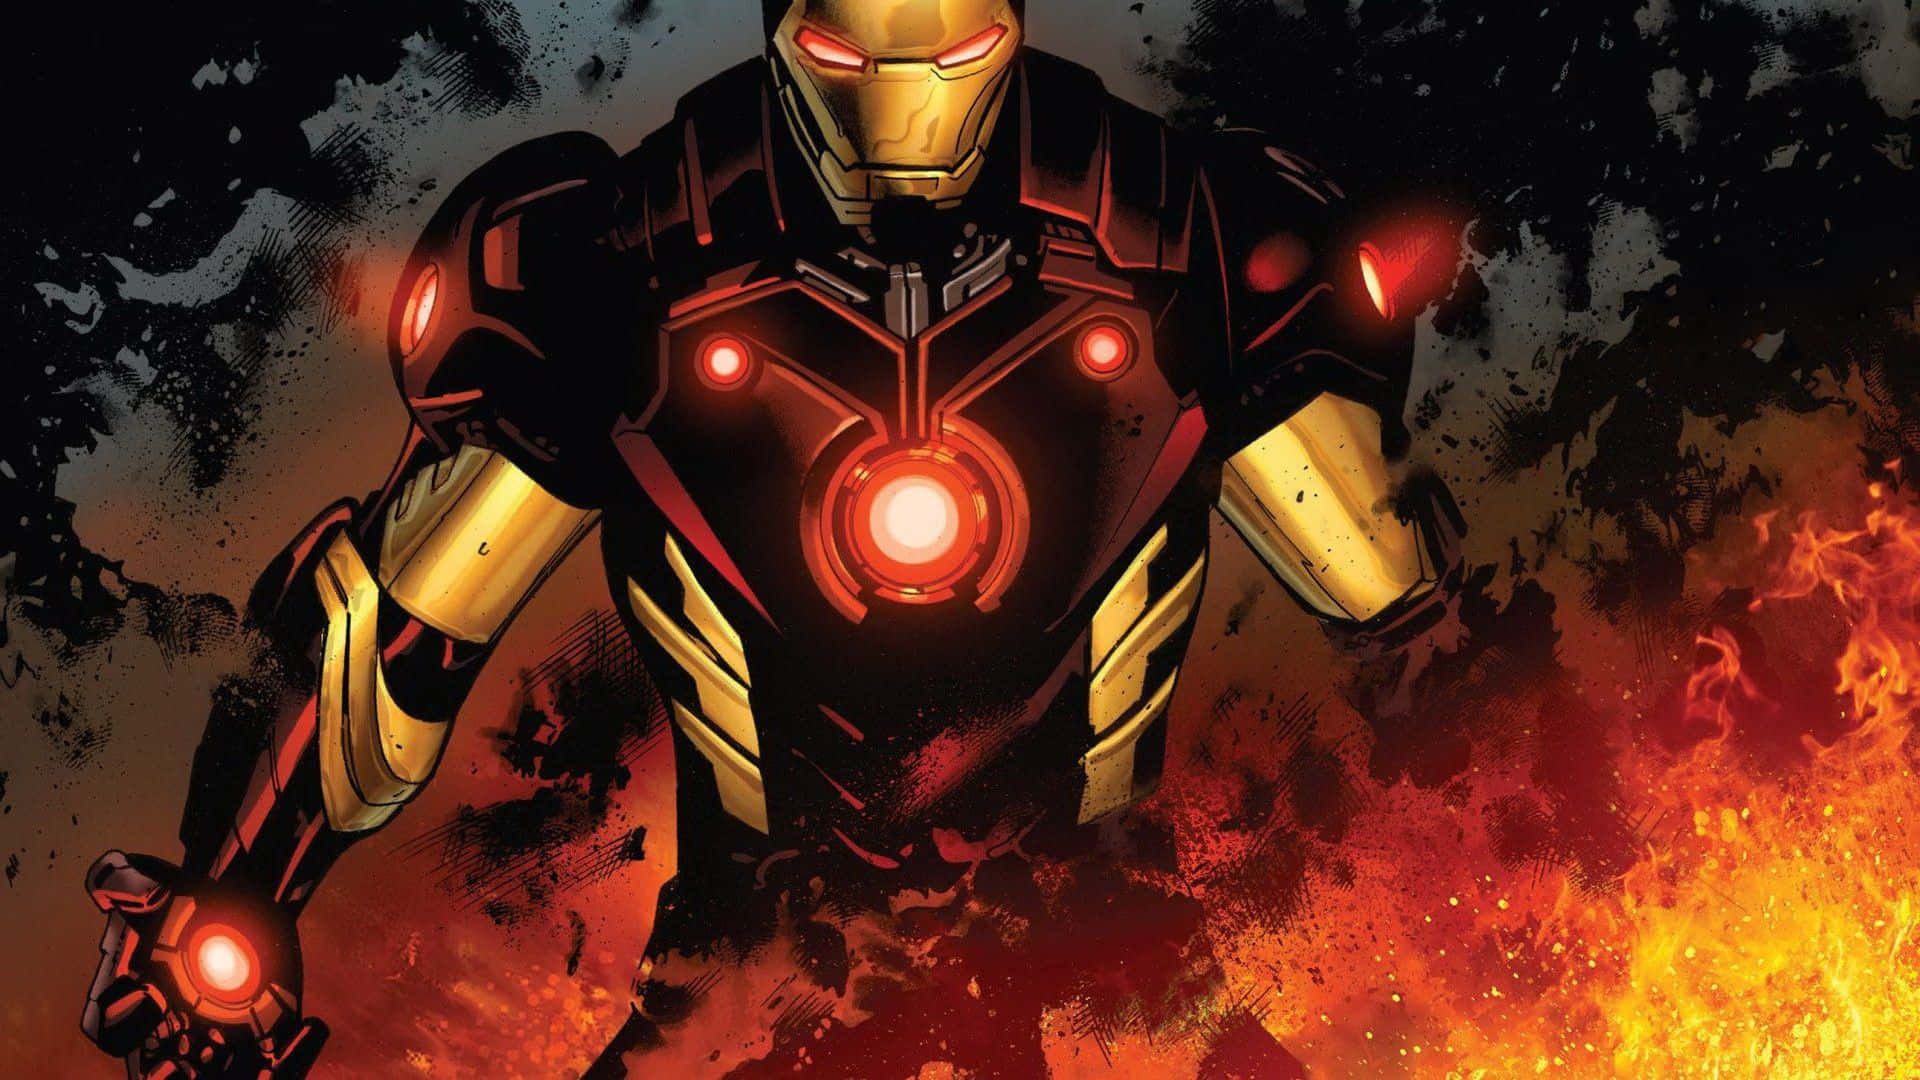 Avengers Battle Damage Kneeling Pose Iron Man